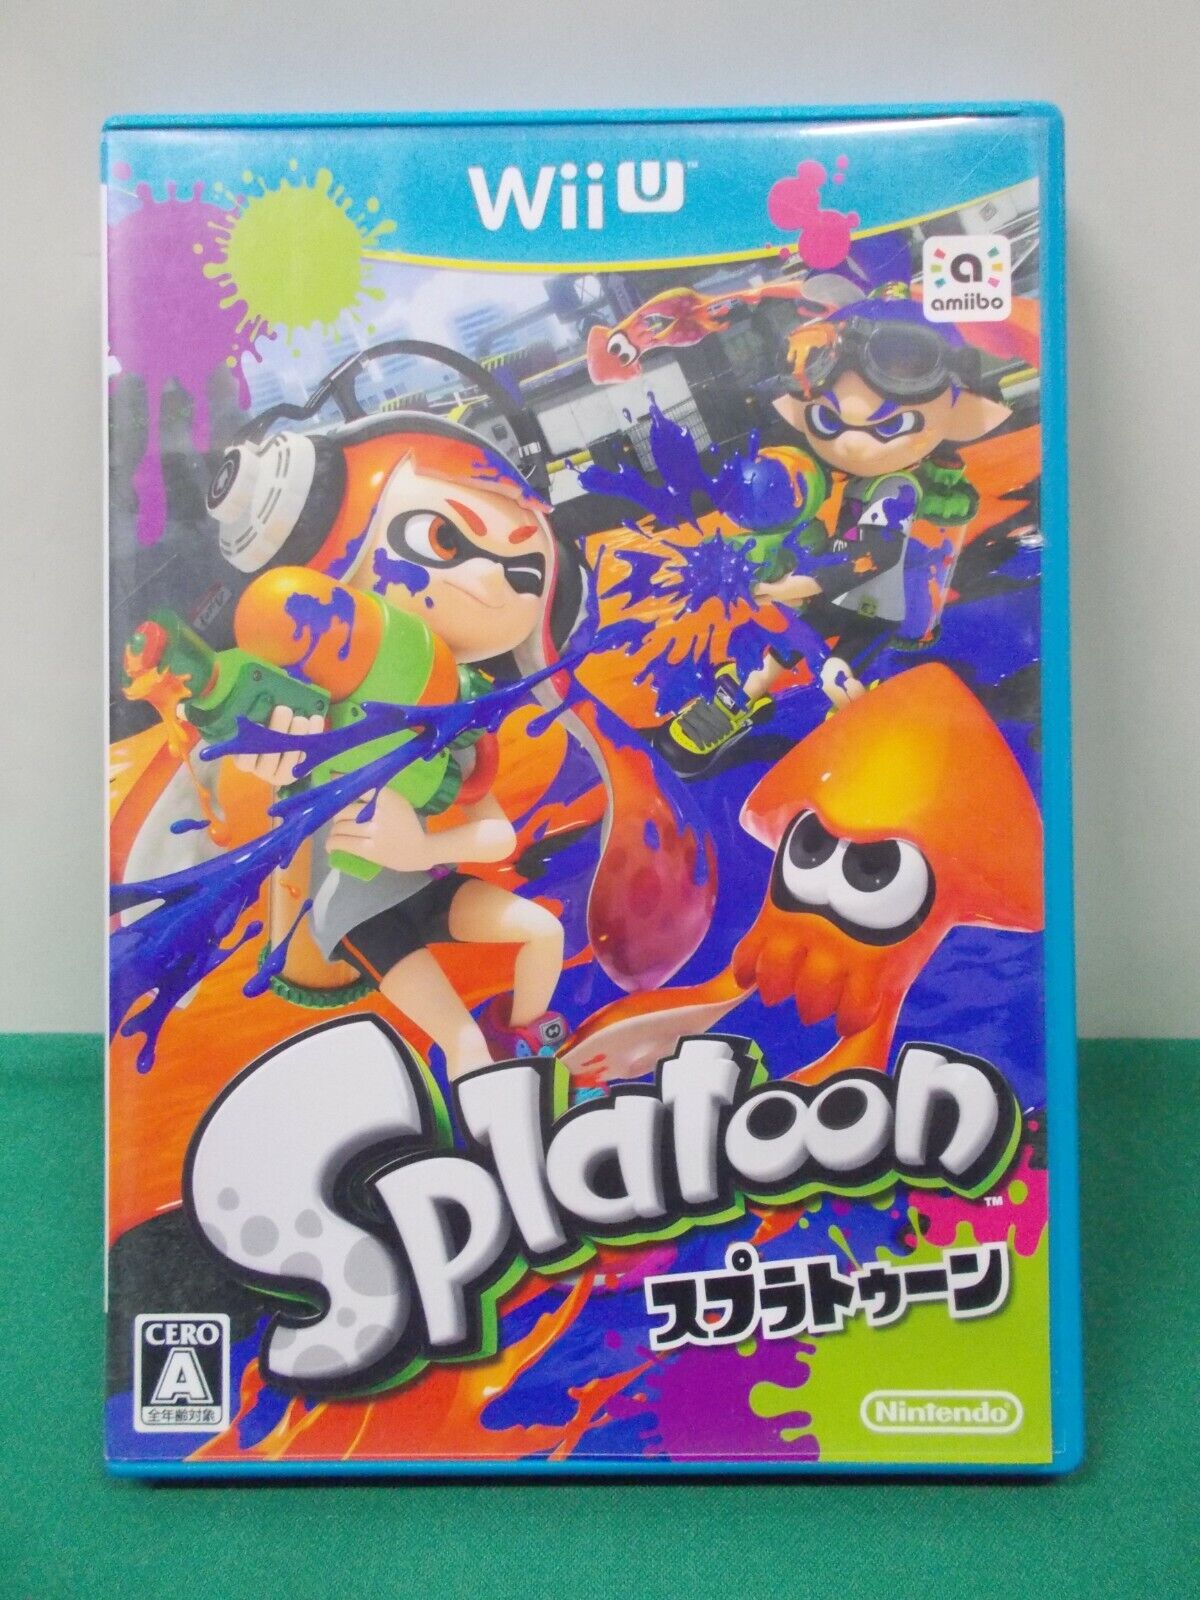 Japanese Edition Nintendo Wii U Splatoon for sale online | eBay